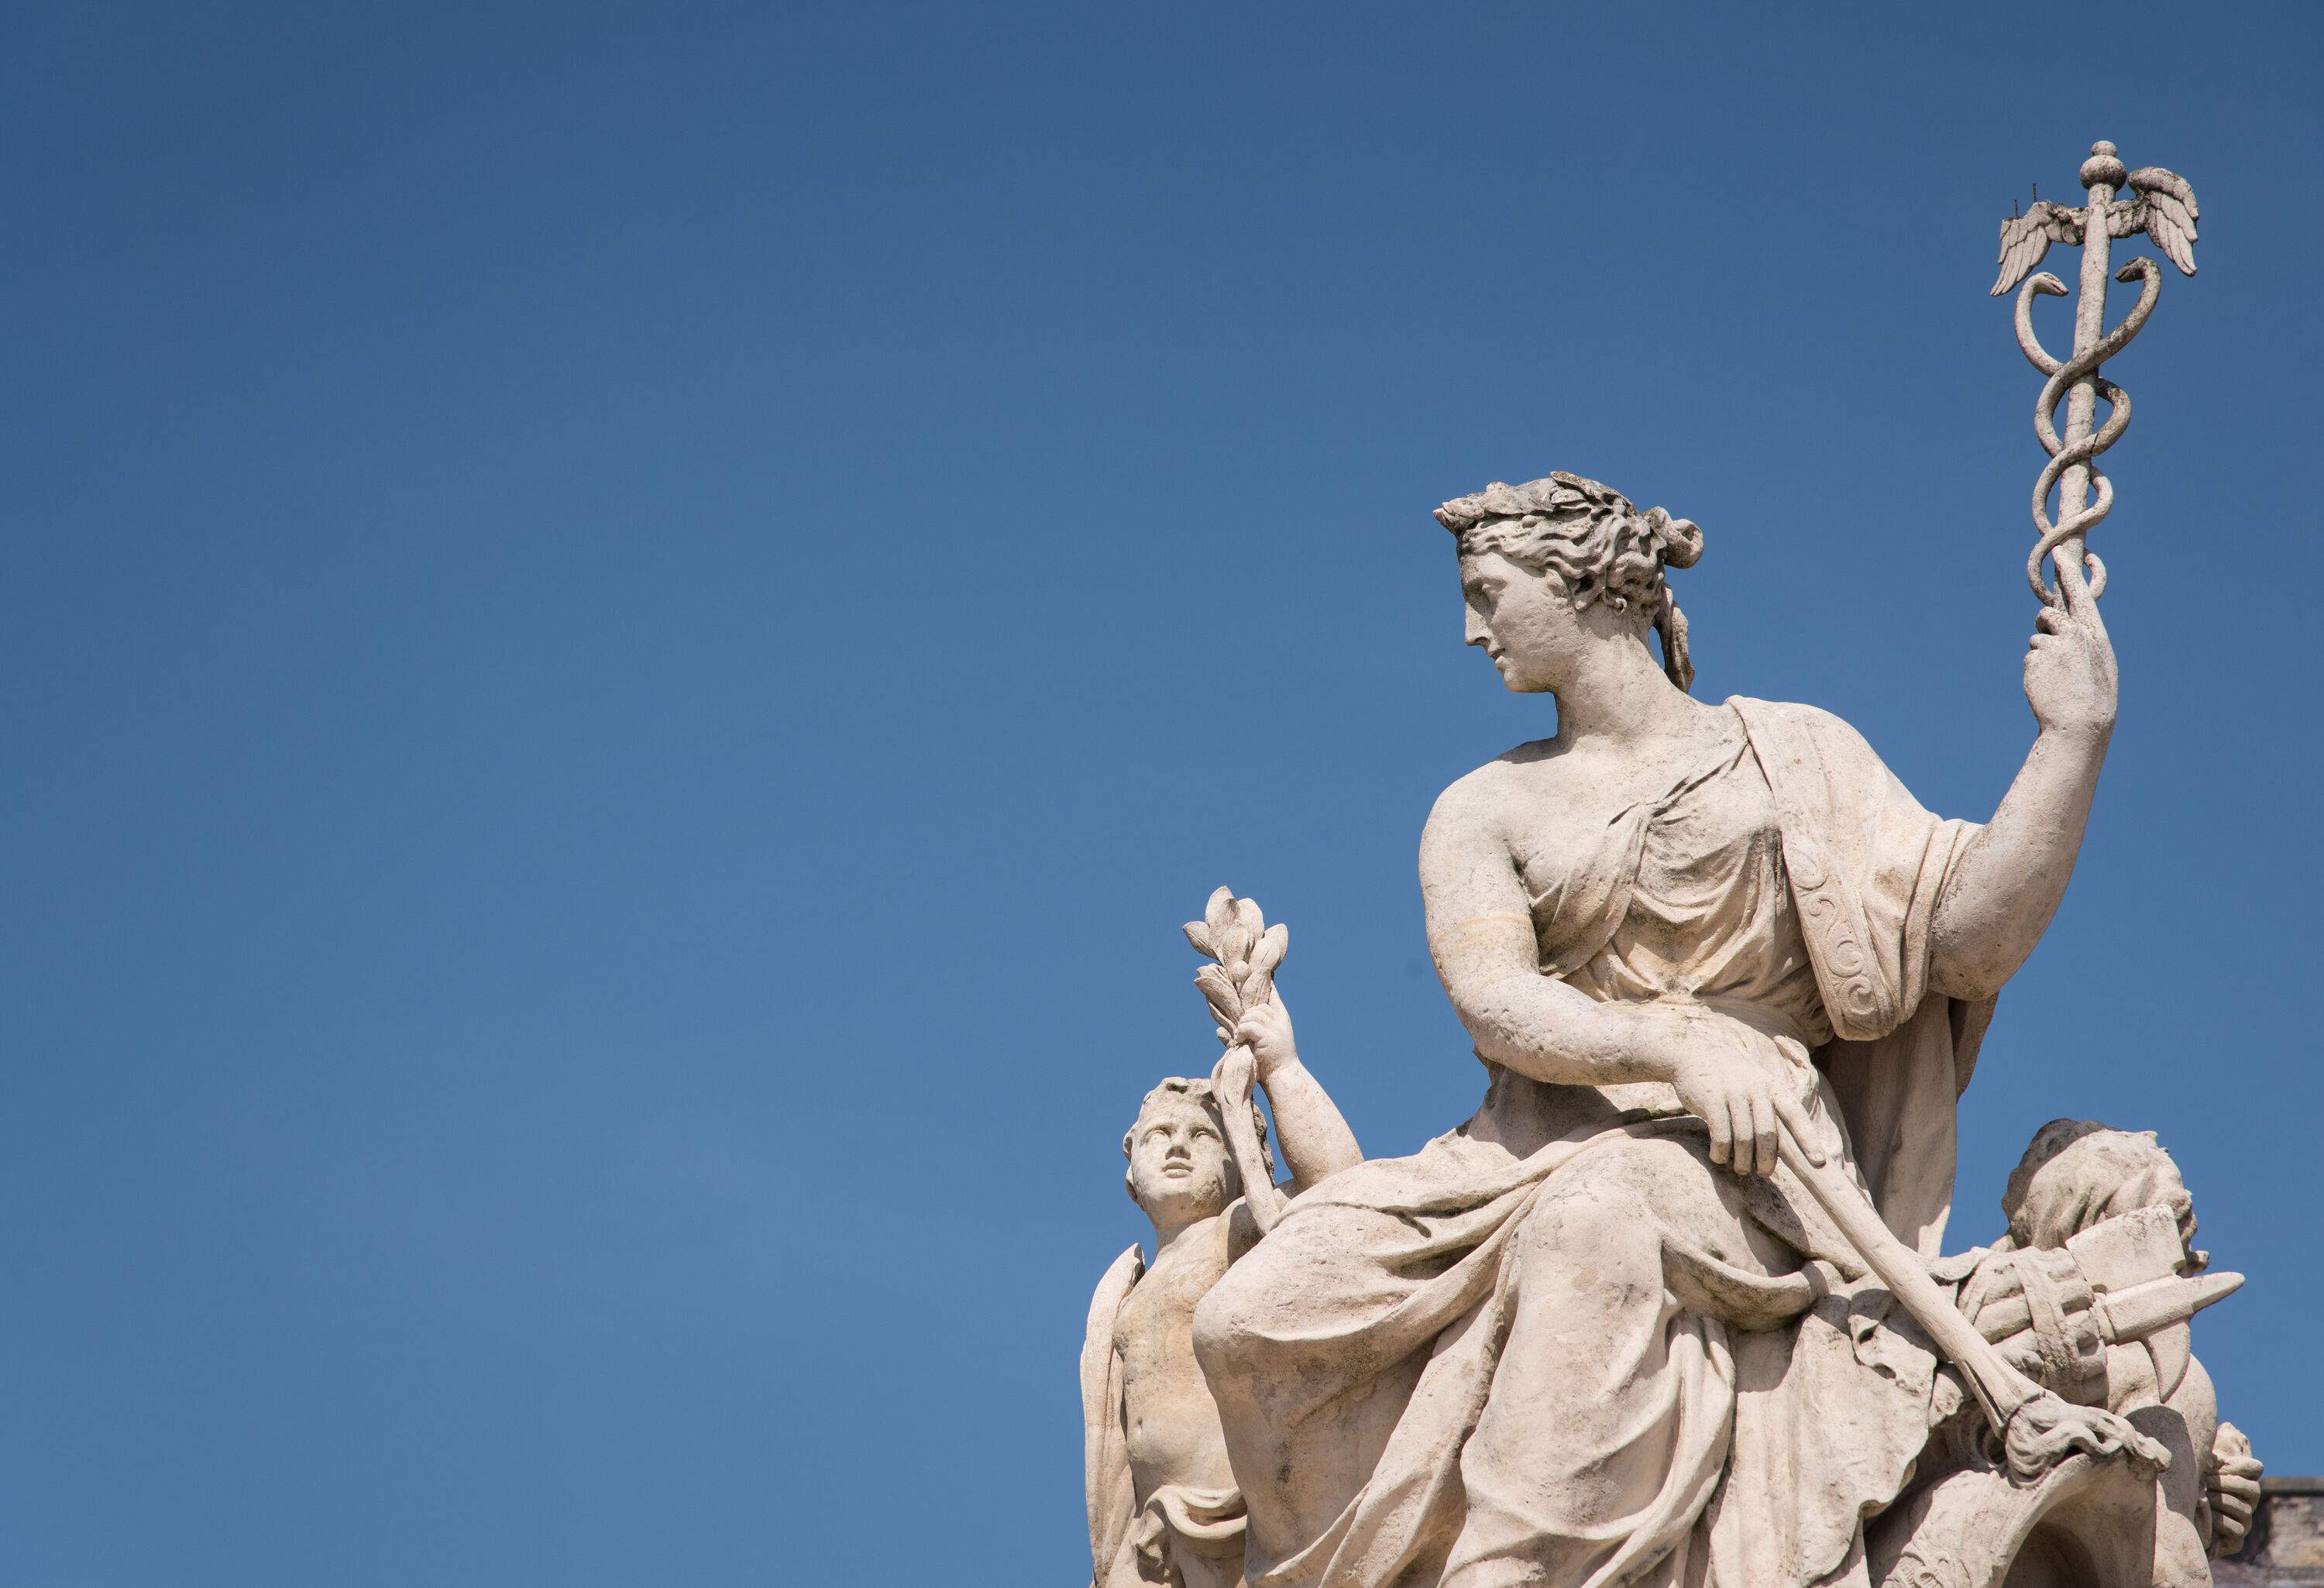 A statue holding a caduceus against the clear blue sky.